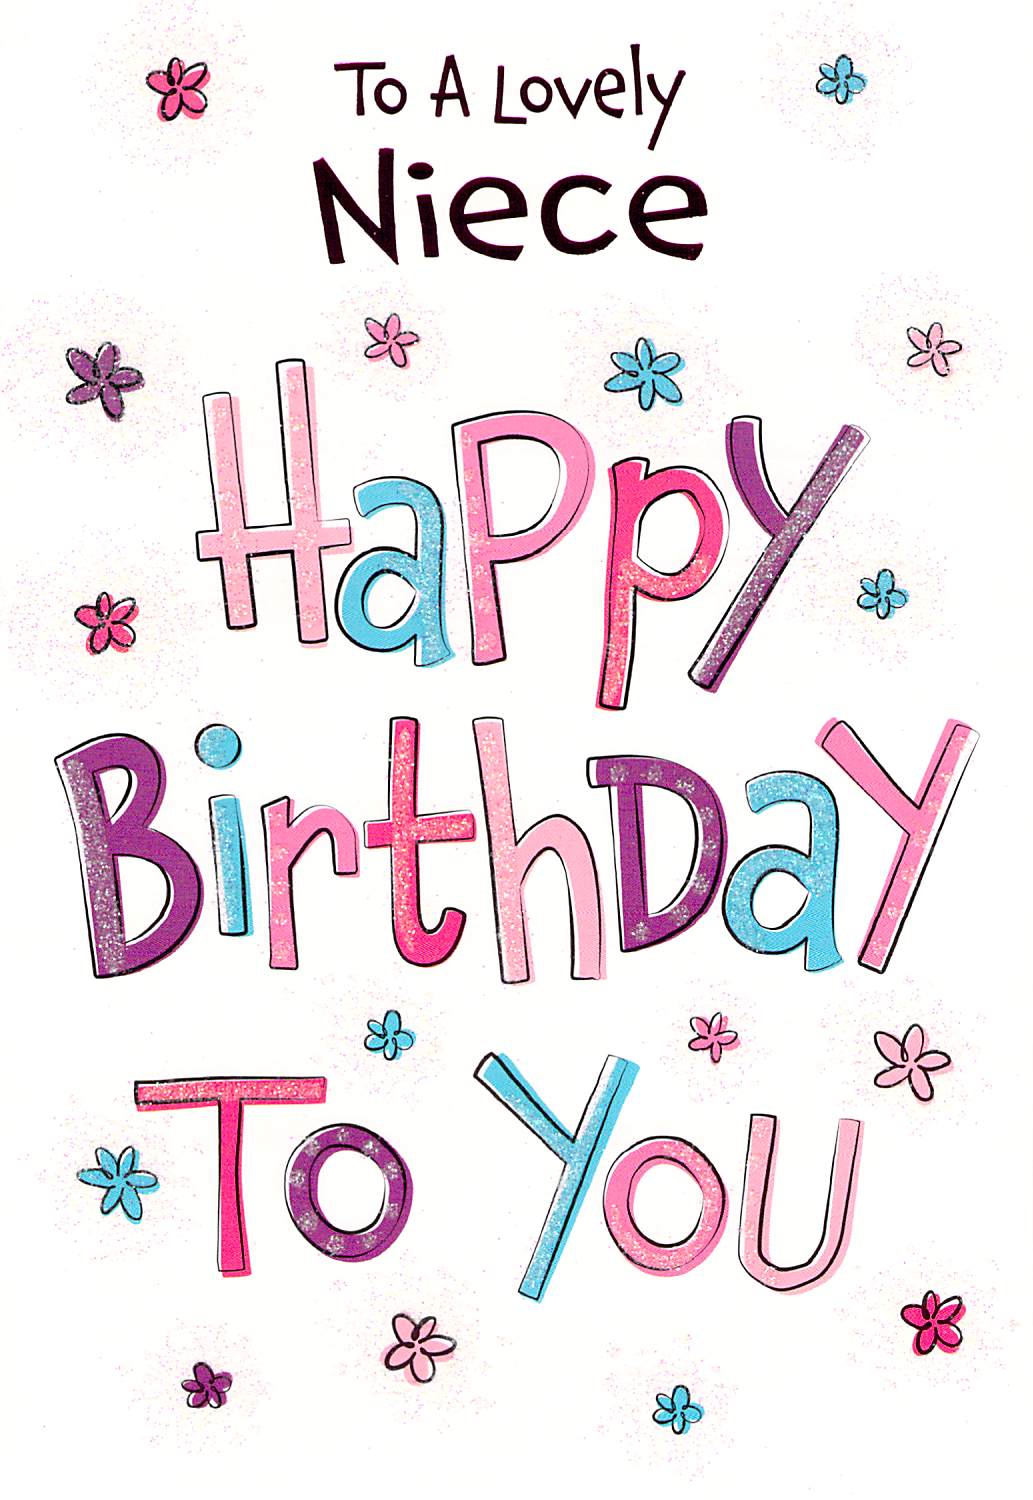 Niece Birthday Card - Happy Birthday To You - Greeting Card - Free Postage